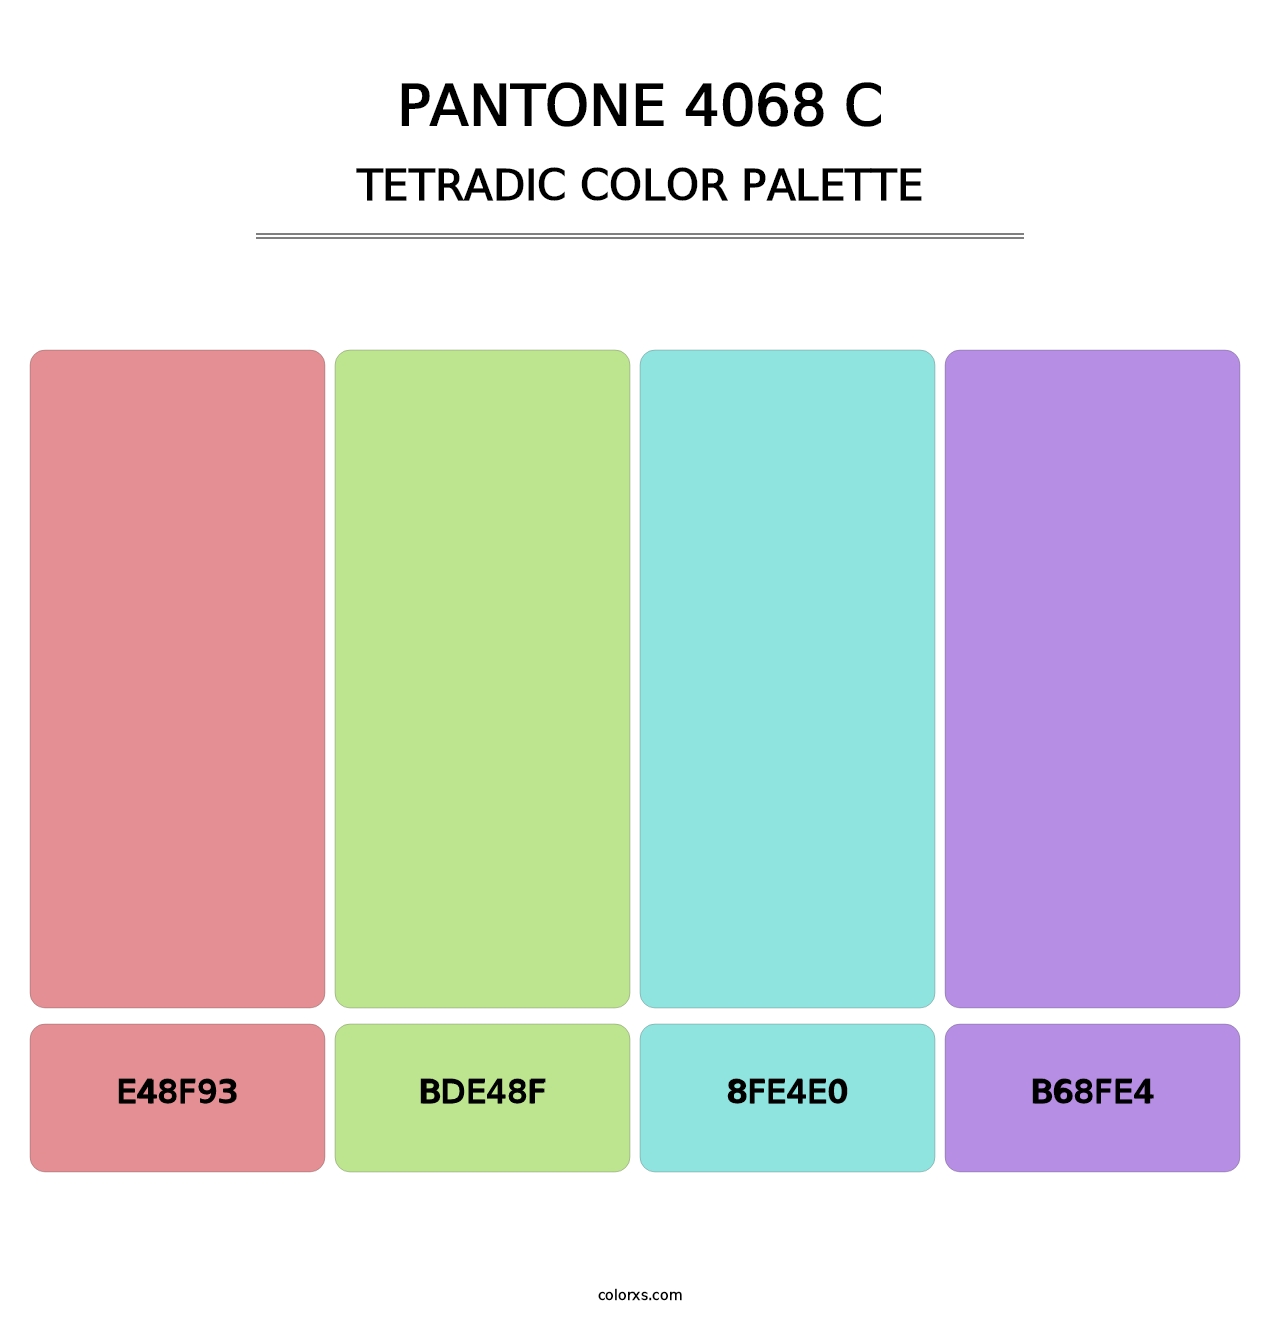 PANTONE 4068 C - Tetradic Color Palette